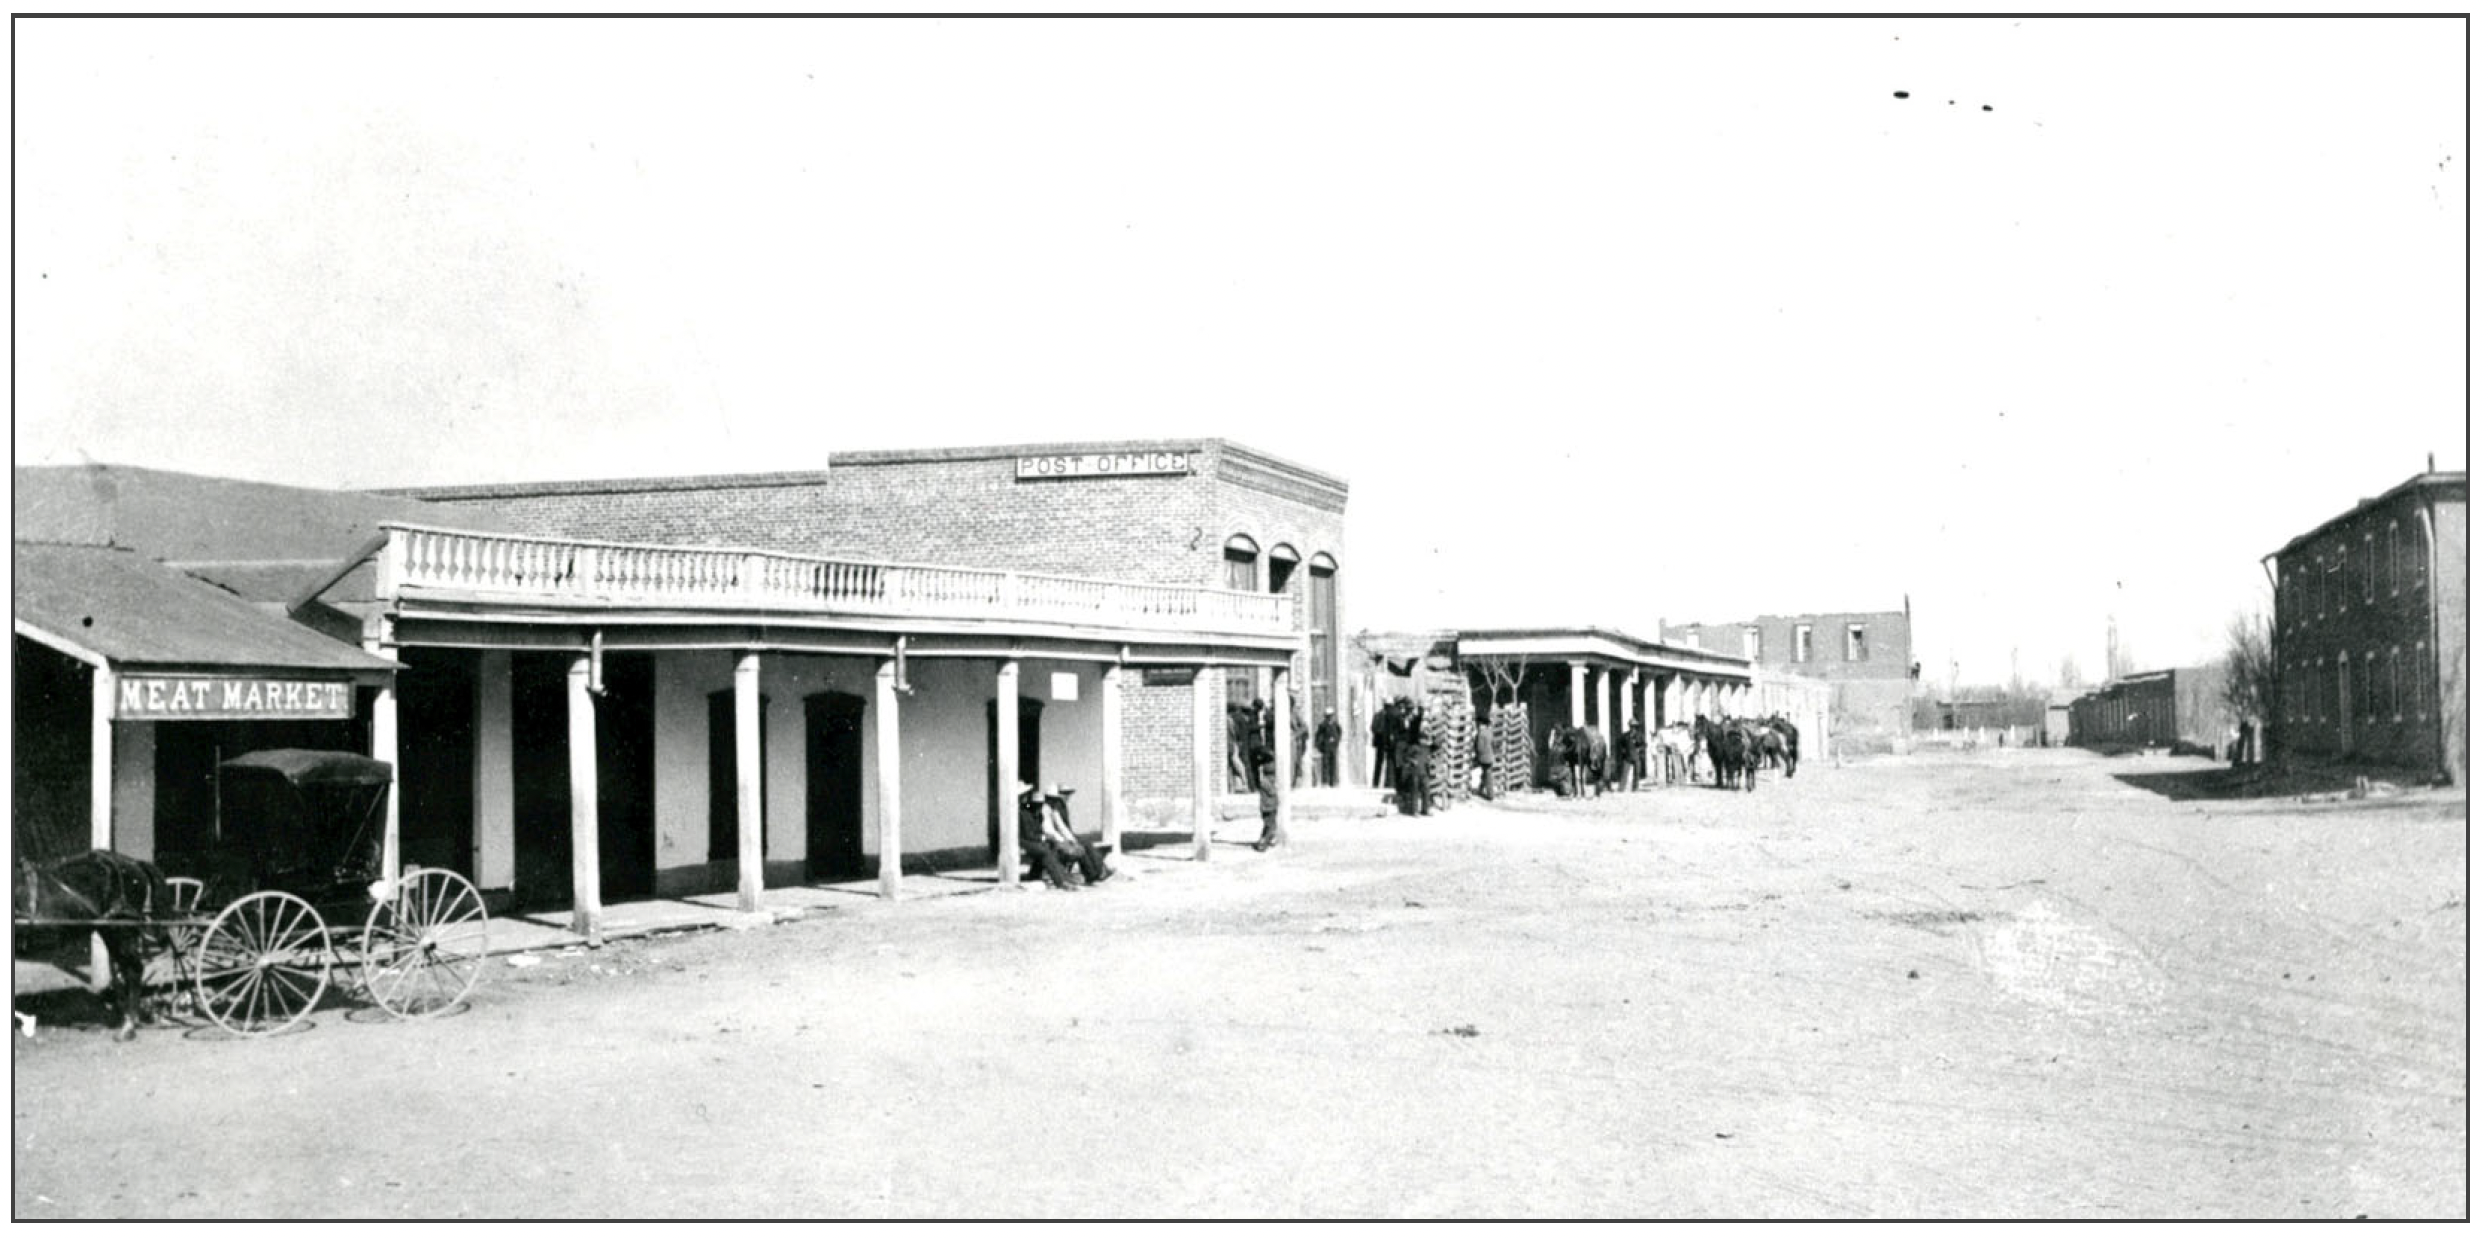 Old Town around 1900, "Basket Shop" building at center